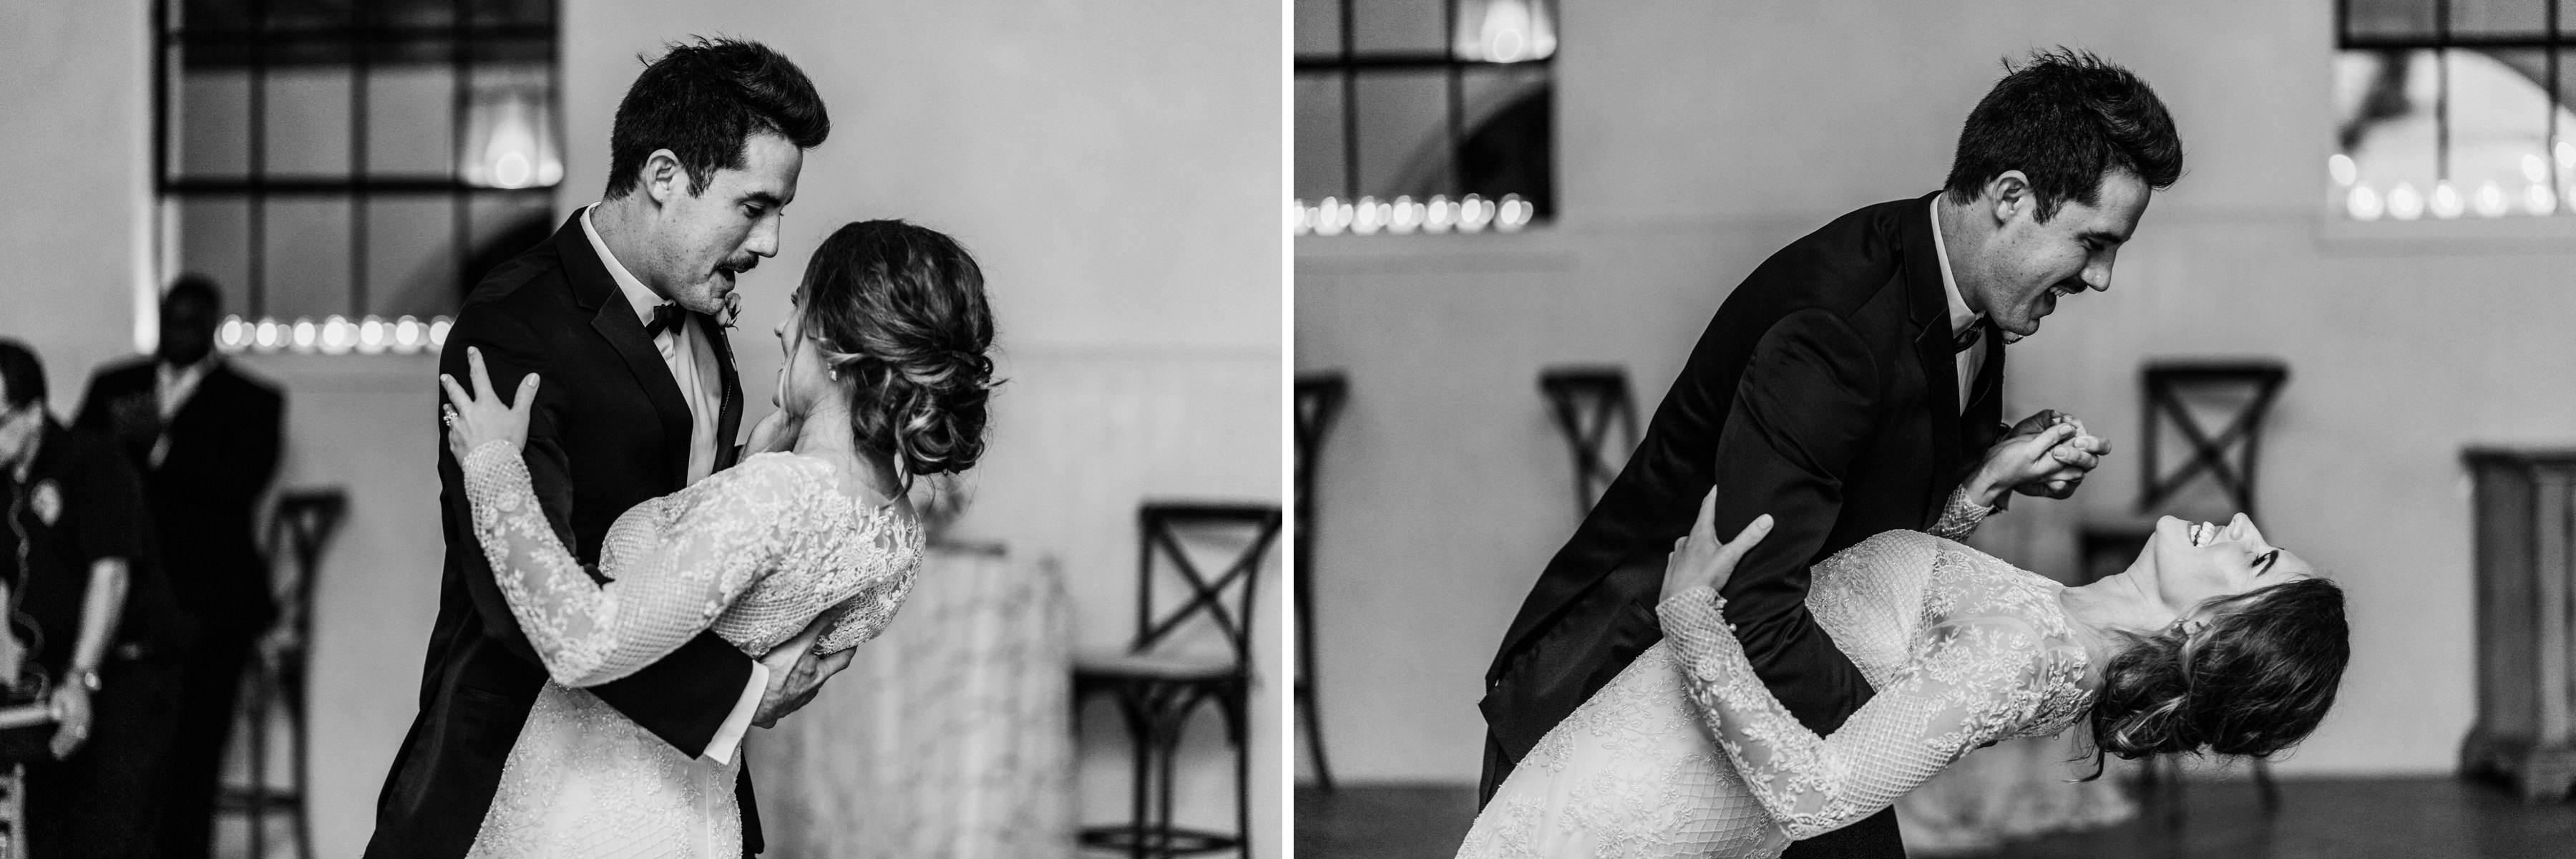 MULLET_WEDDING_NEW_ORLEANS_LOUISIANA_WEDDING_PHOTOGRAPHY_163